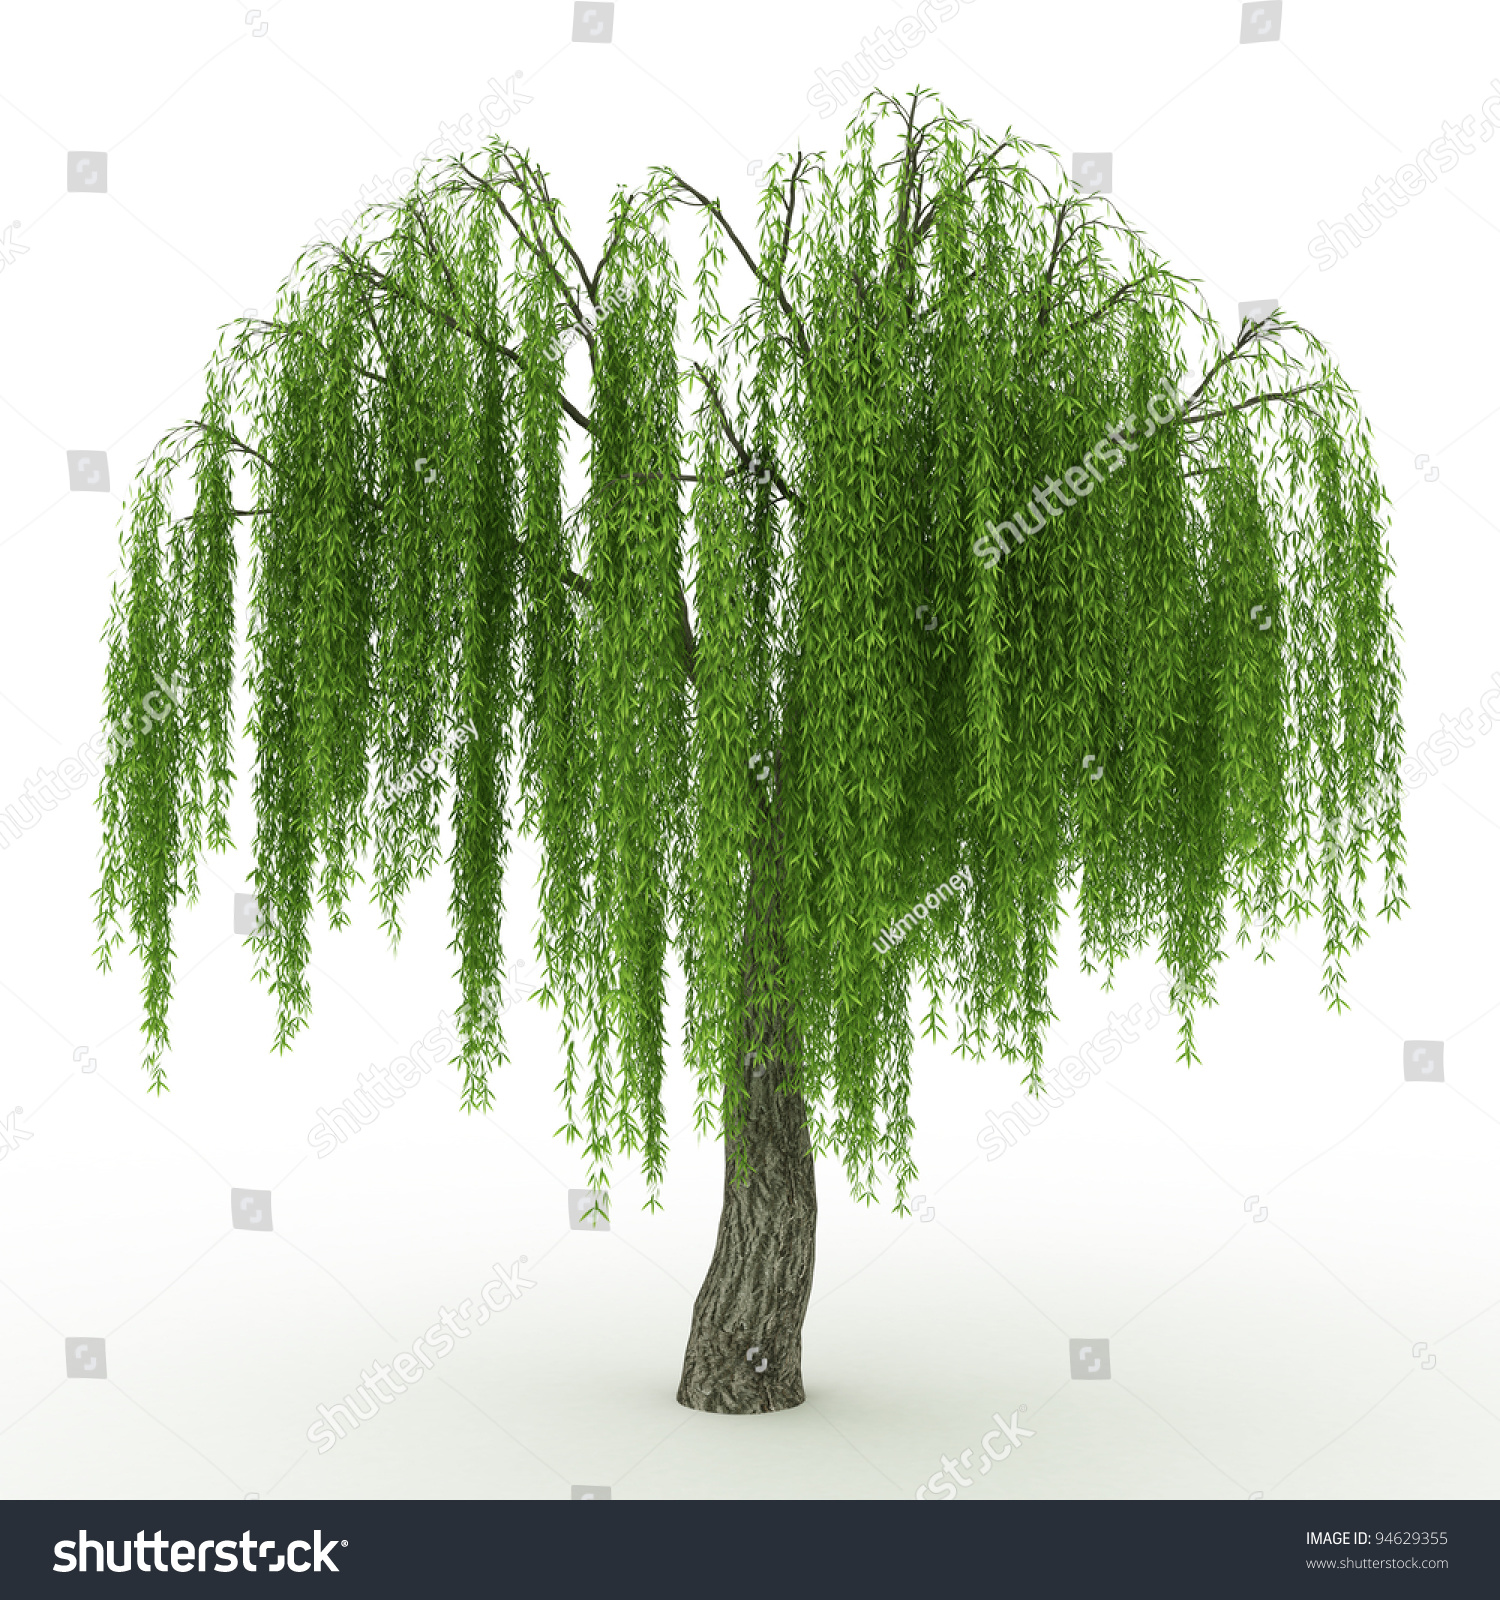 clip art willow tree - photo #48